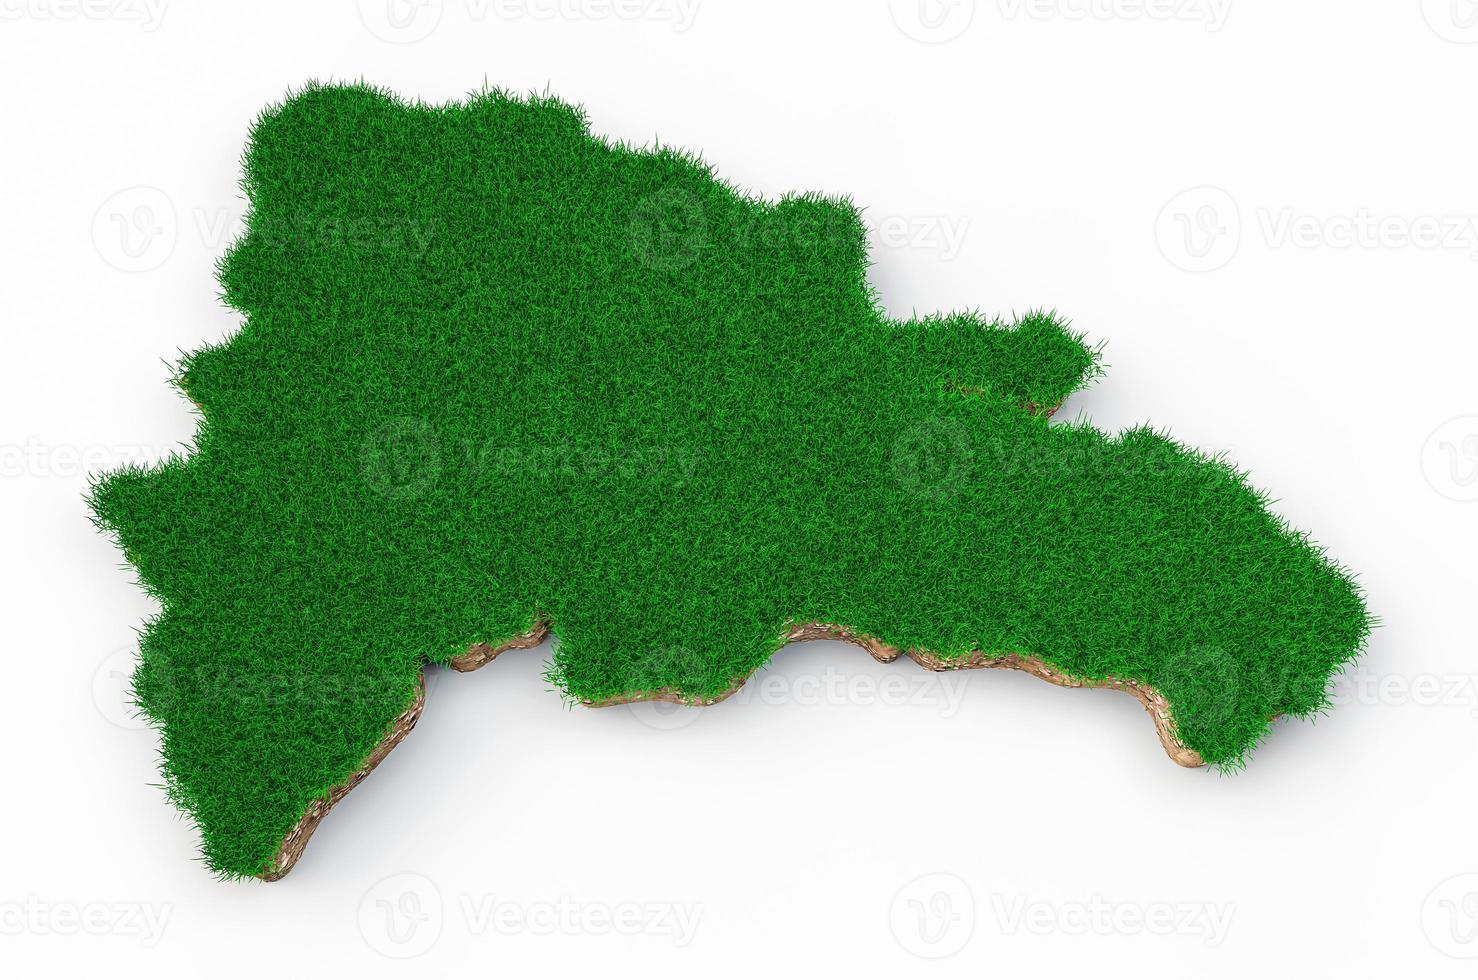 dominikanische republik karte boden land geologie querschnitt mit grünem gras und felsen bodentextur 3d illustration foto